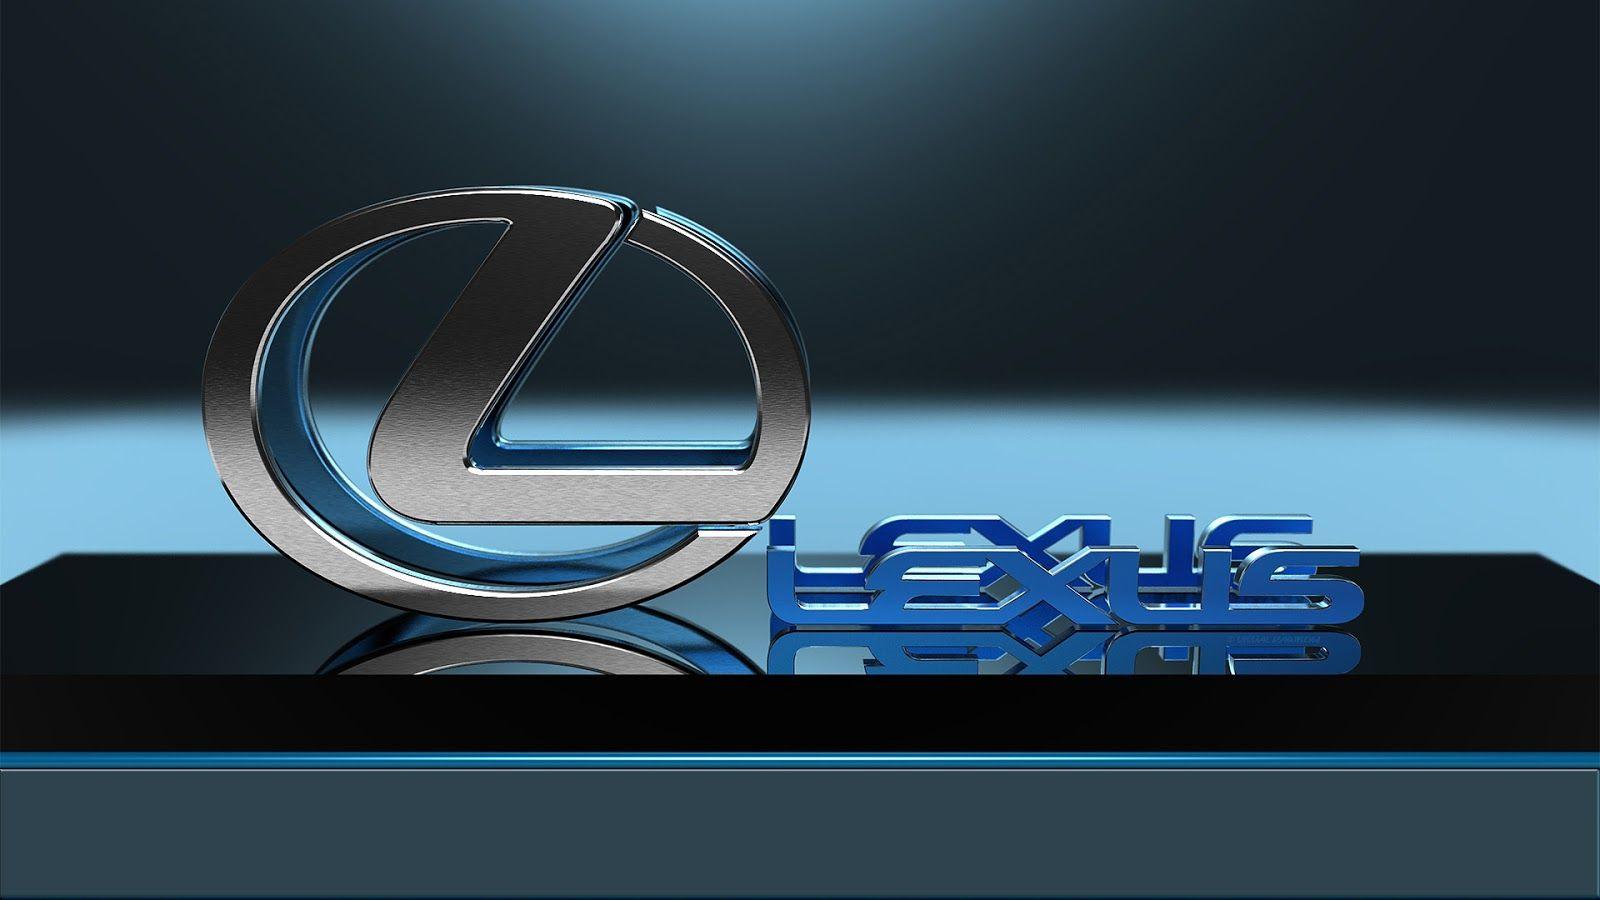 Cool Car Company Logo - Lexus Logo, Lexus Car Symbol Meaning and History. Car Brand Names.com